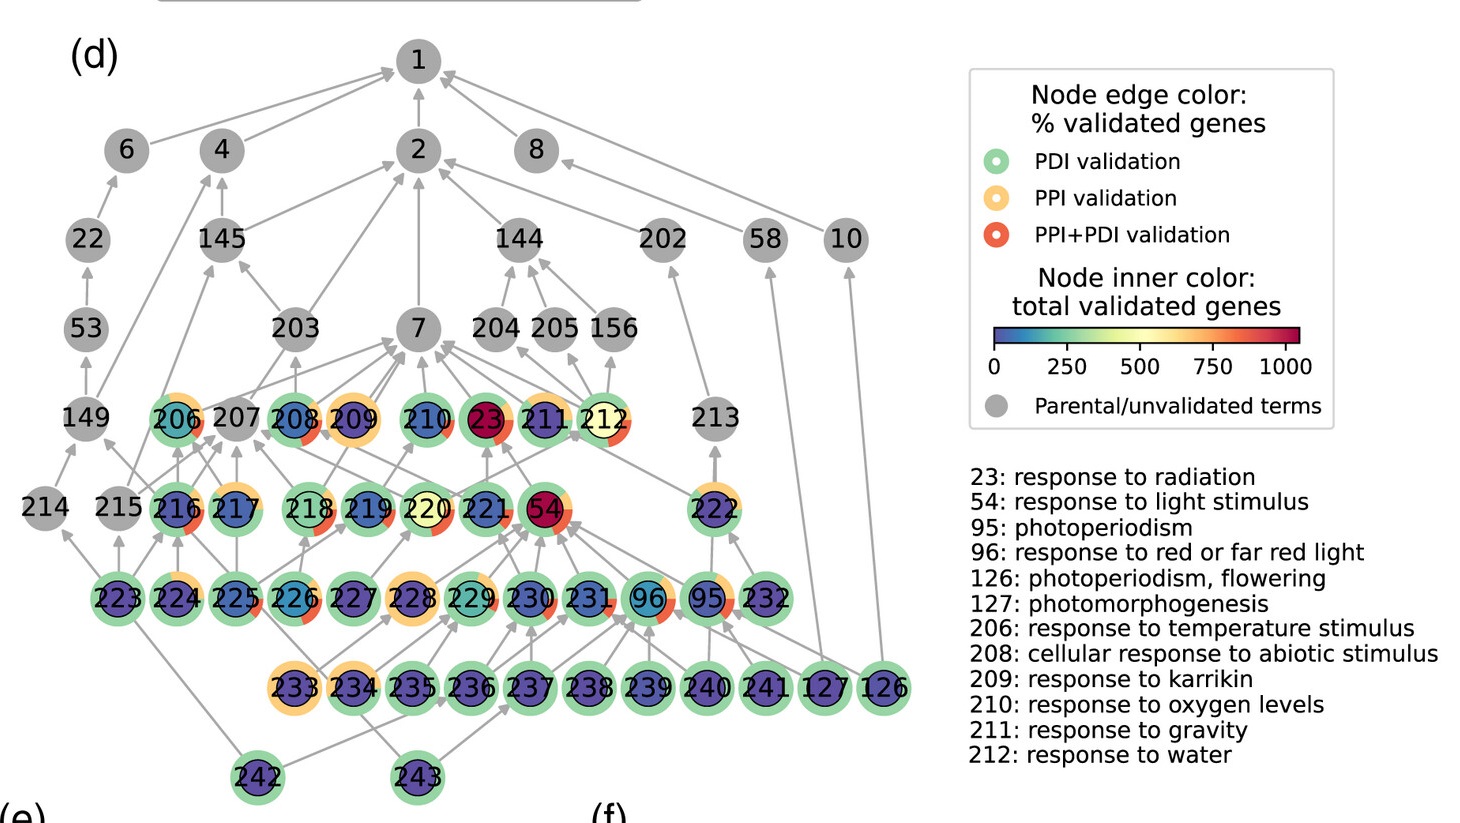 Gene function networks